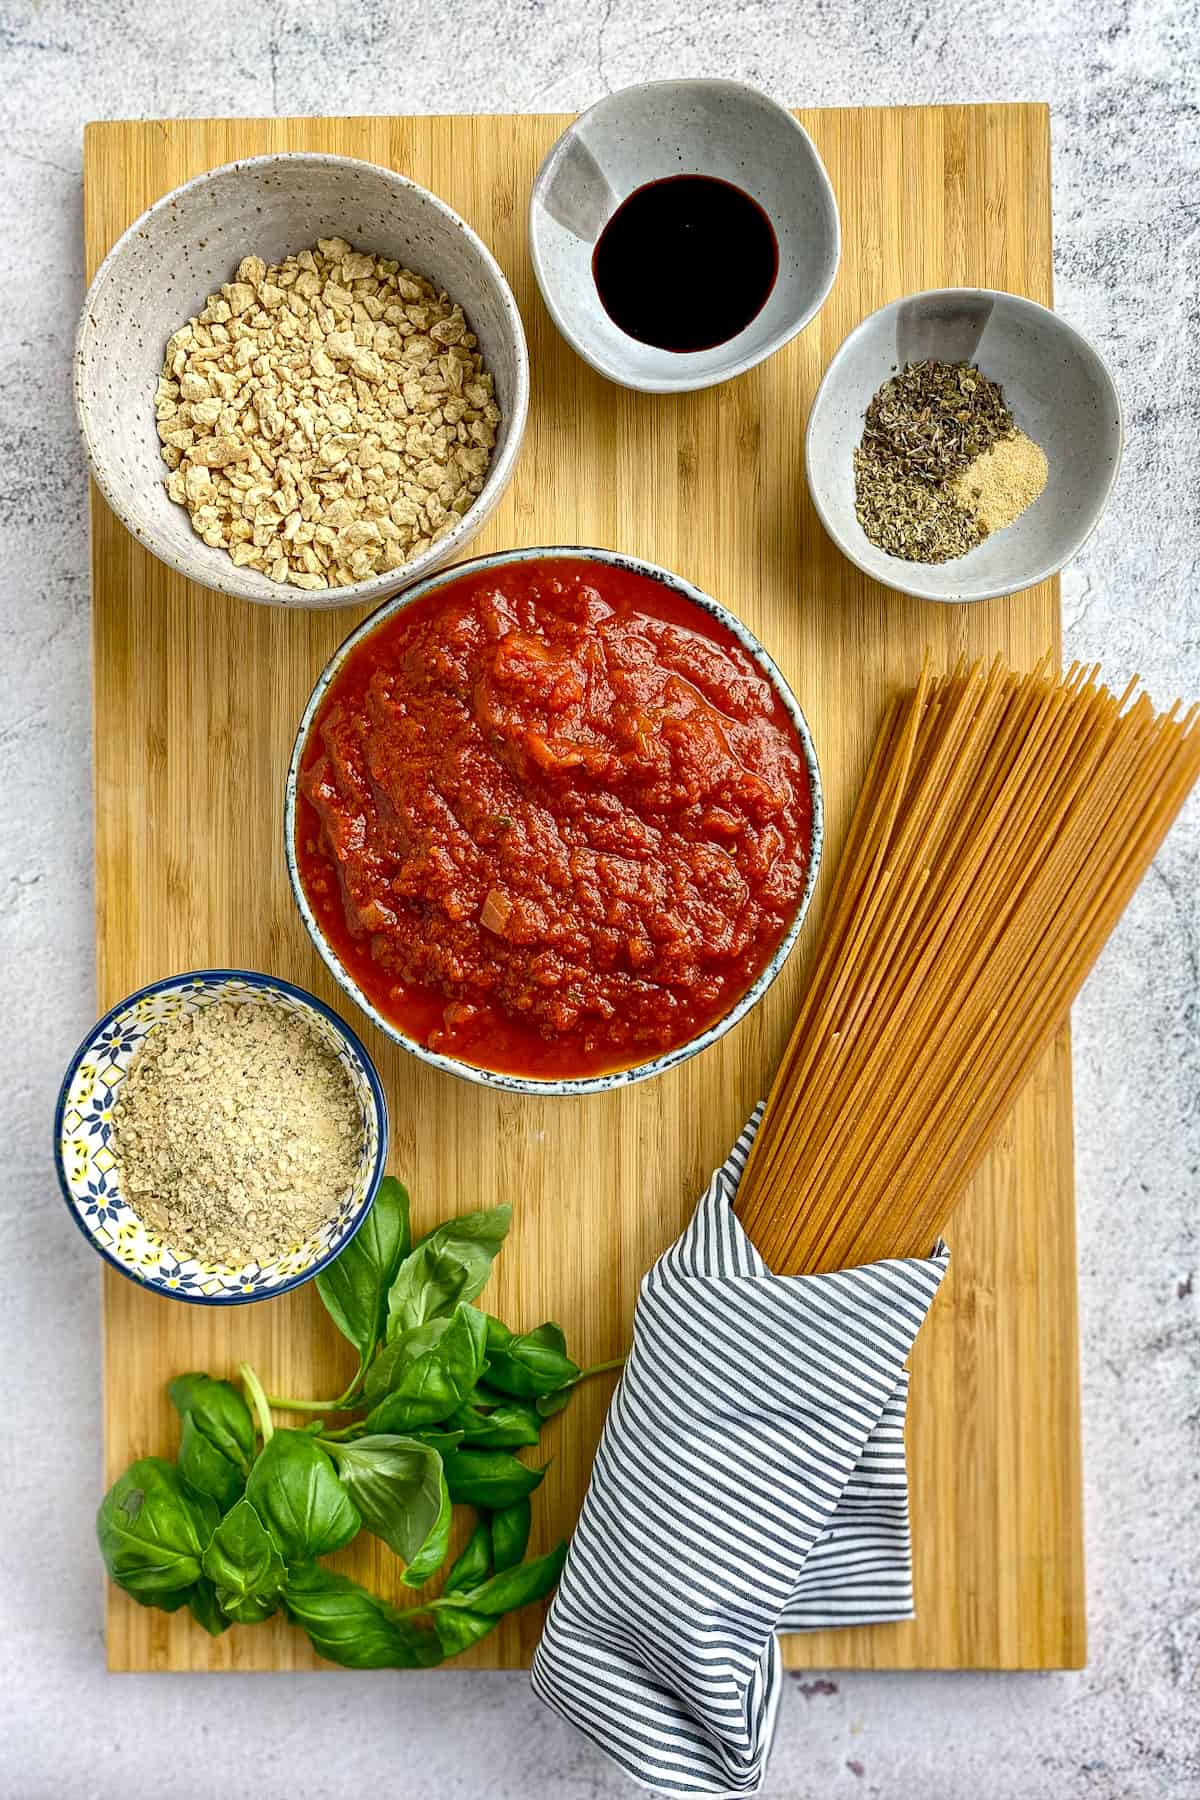 Ingredients for vegan spaghetti.